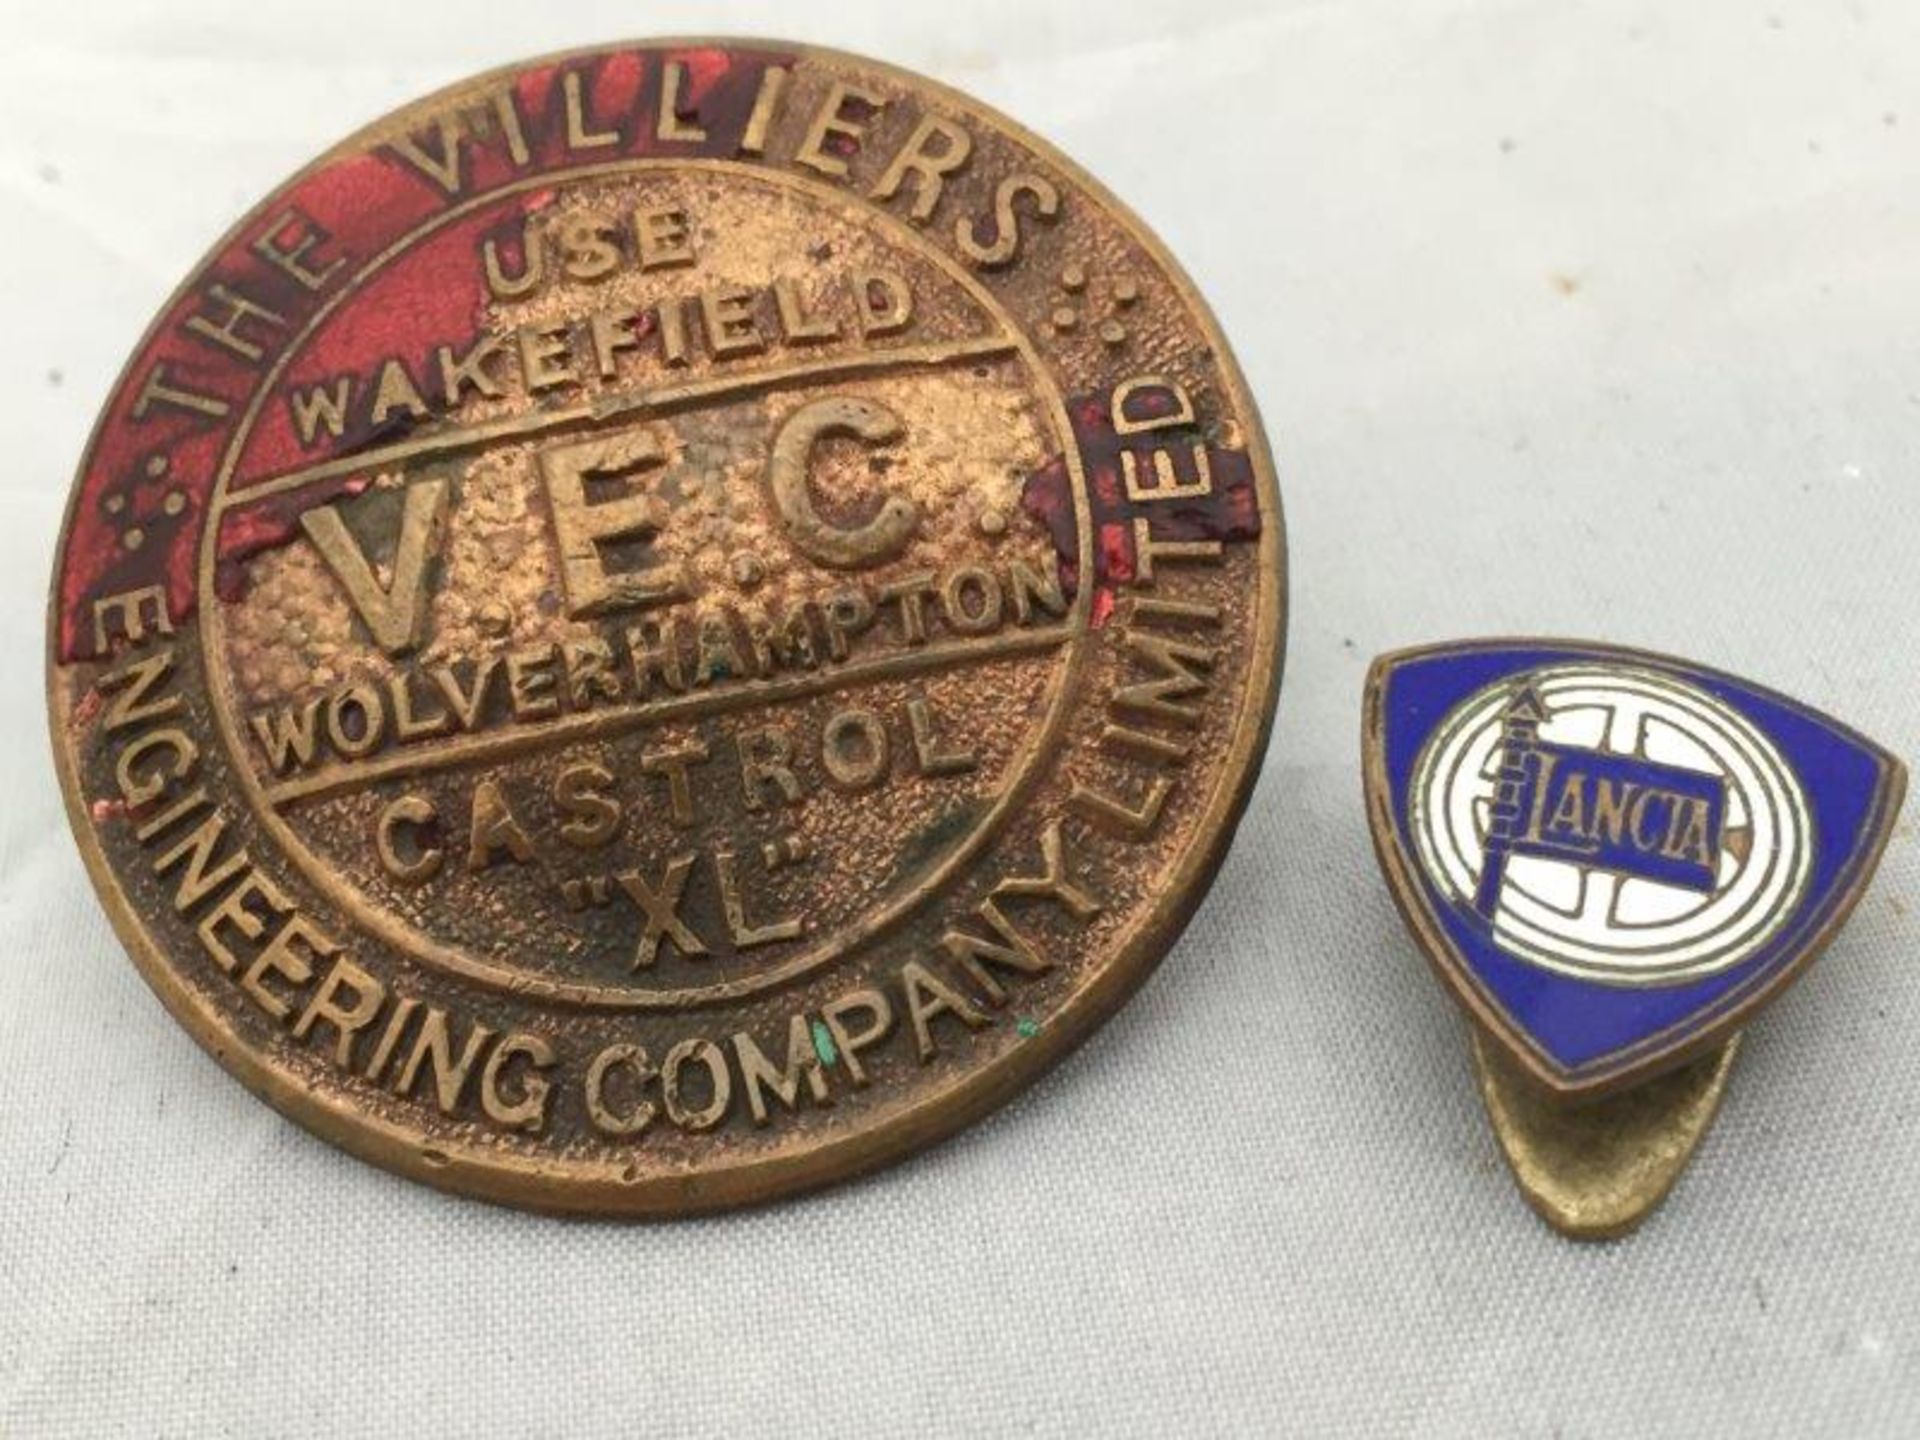 A Wakefield Castrol VEC Motor Oil badge clip together with a Lancia Motor Car enamel lapel badge.